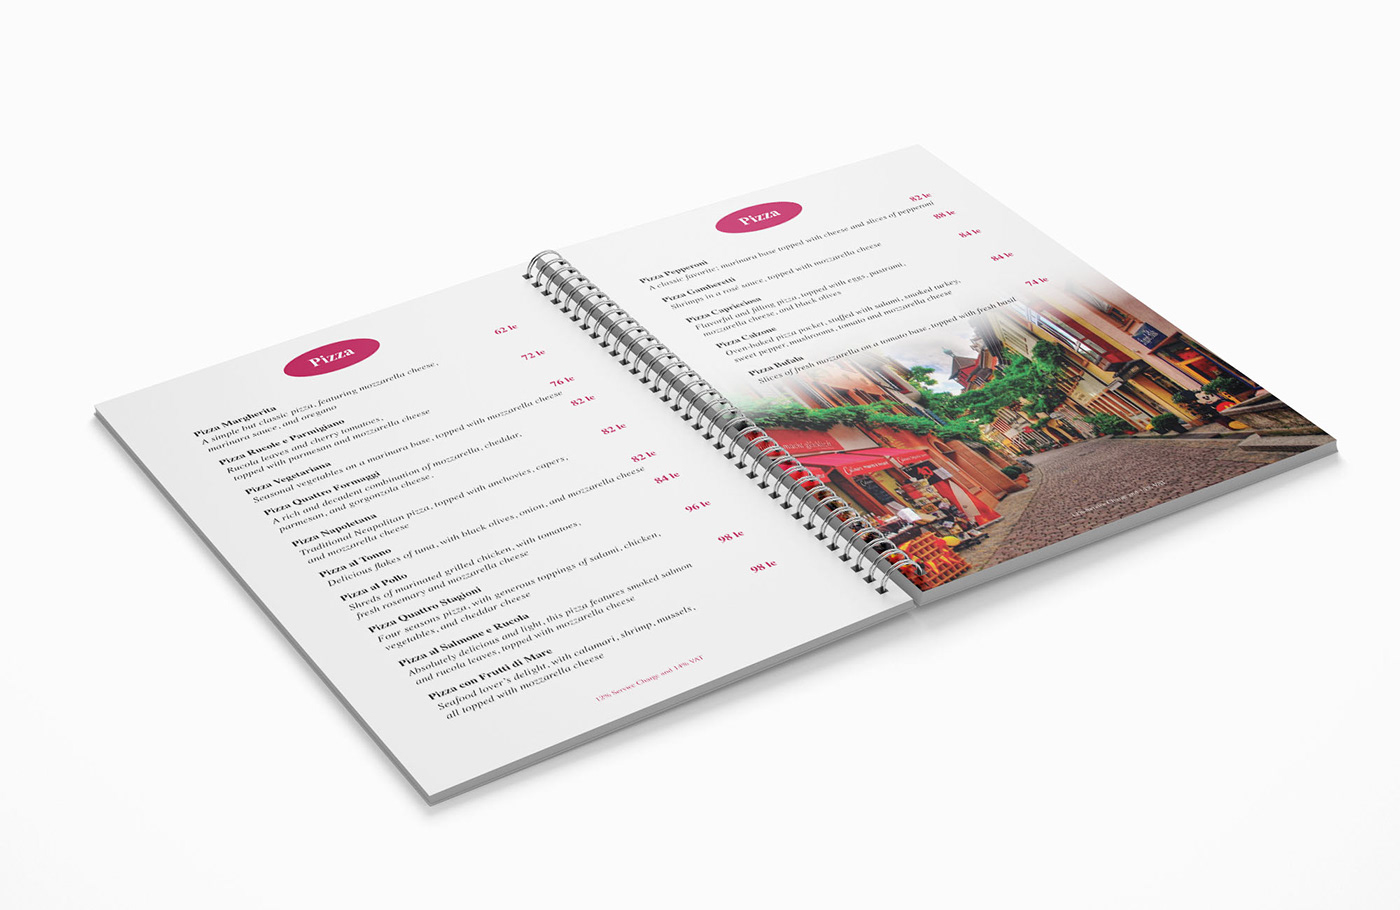 capricci restaurant bakery Spiral Bound menu bundle print design